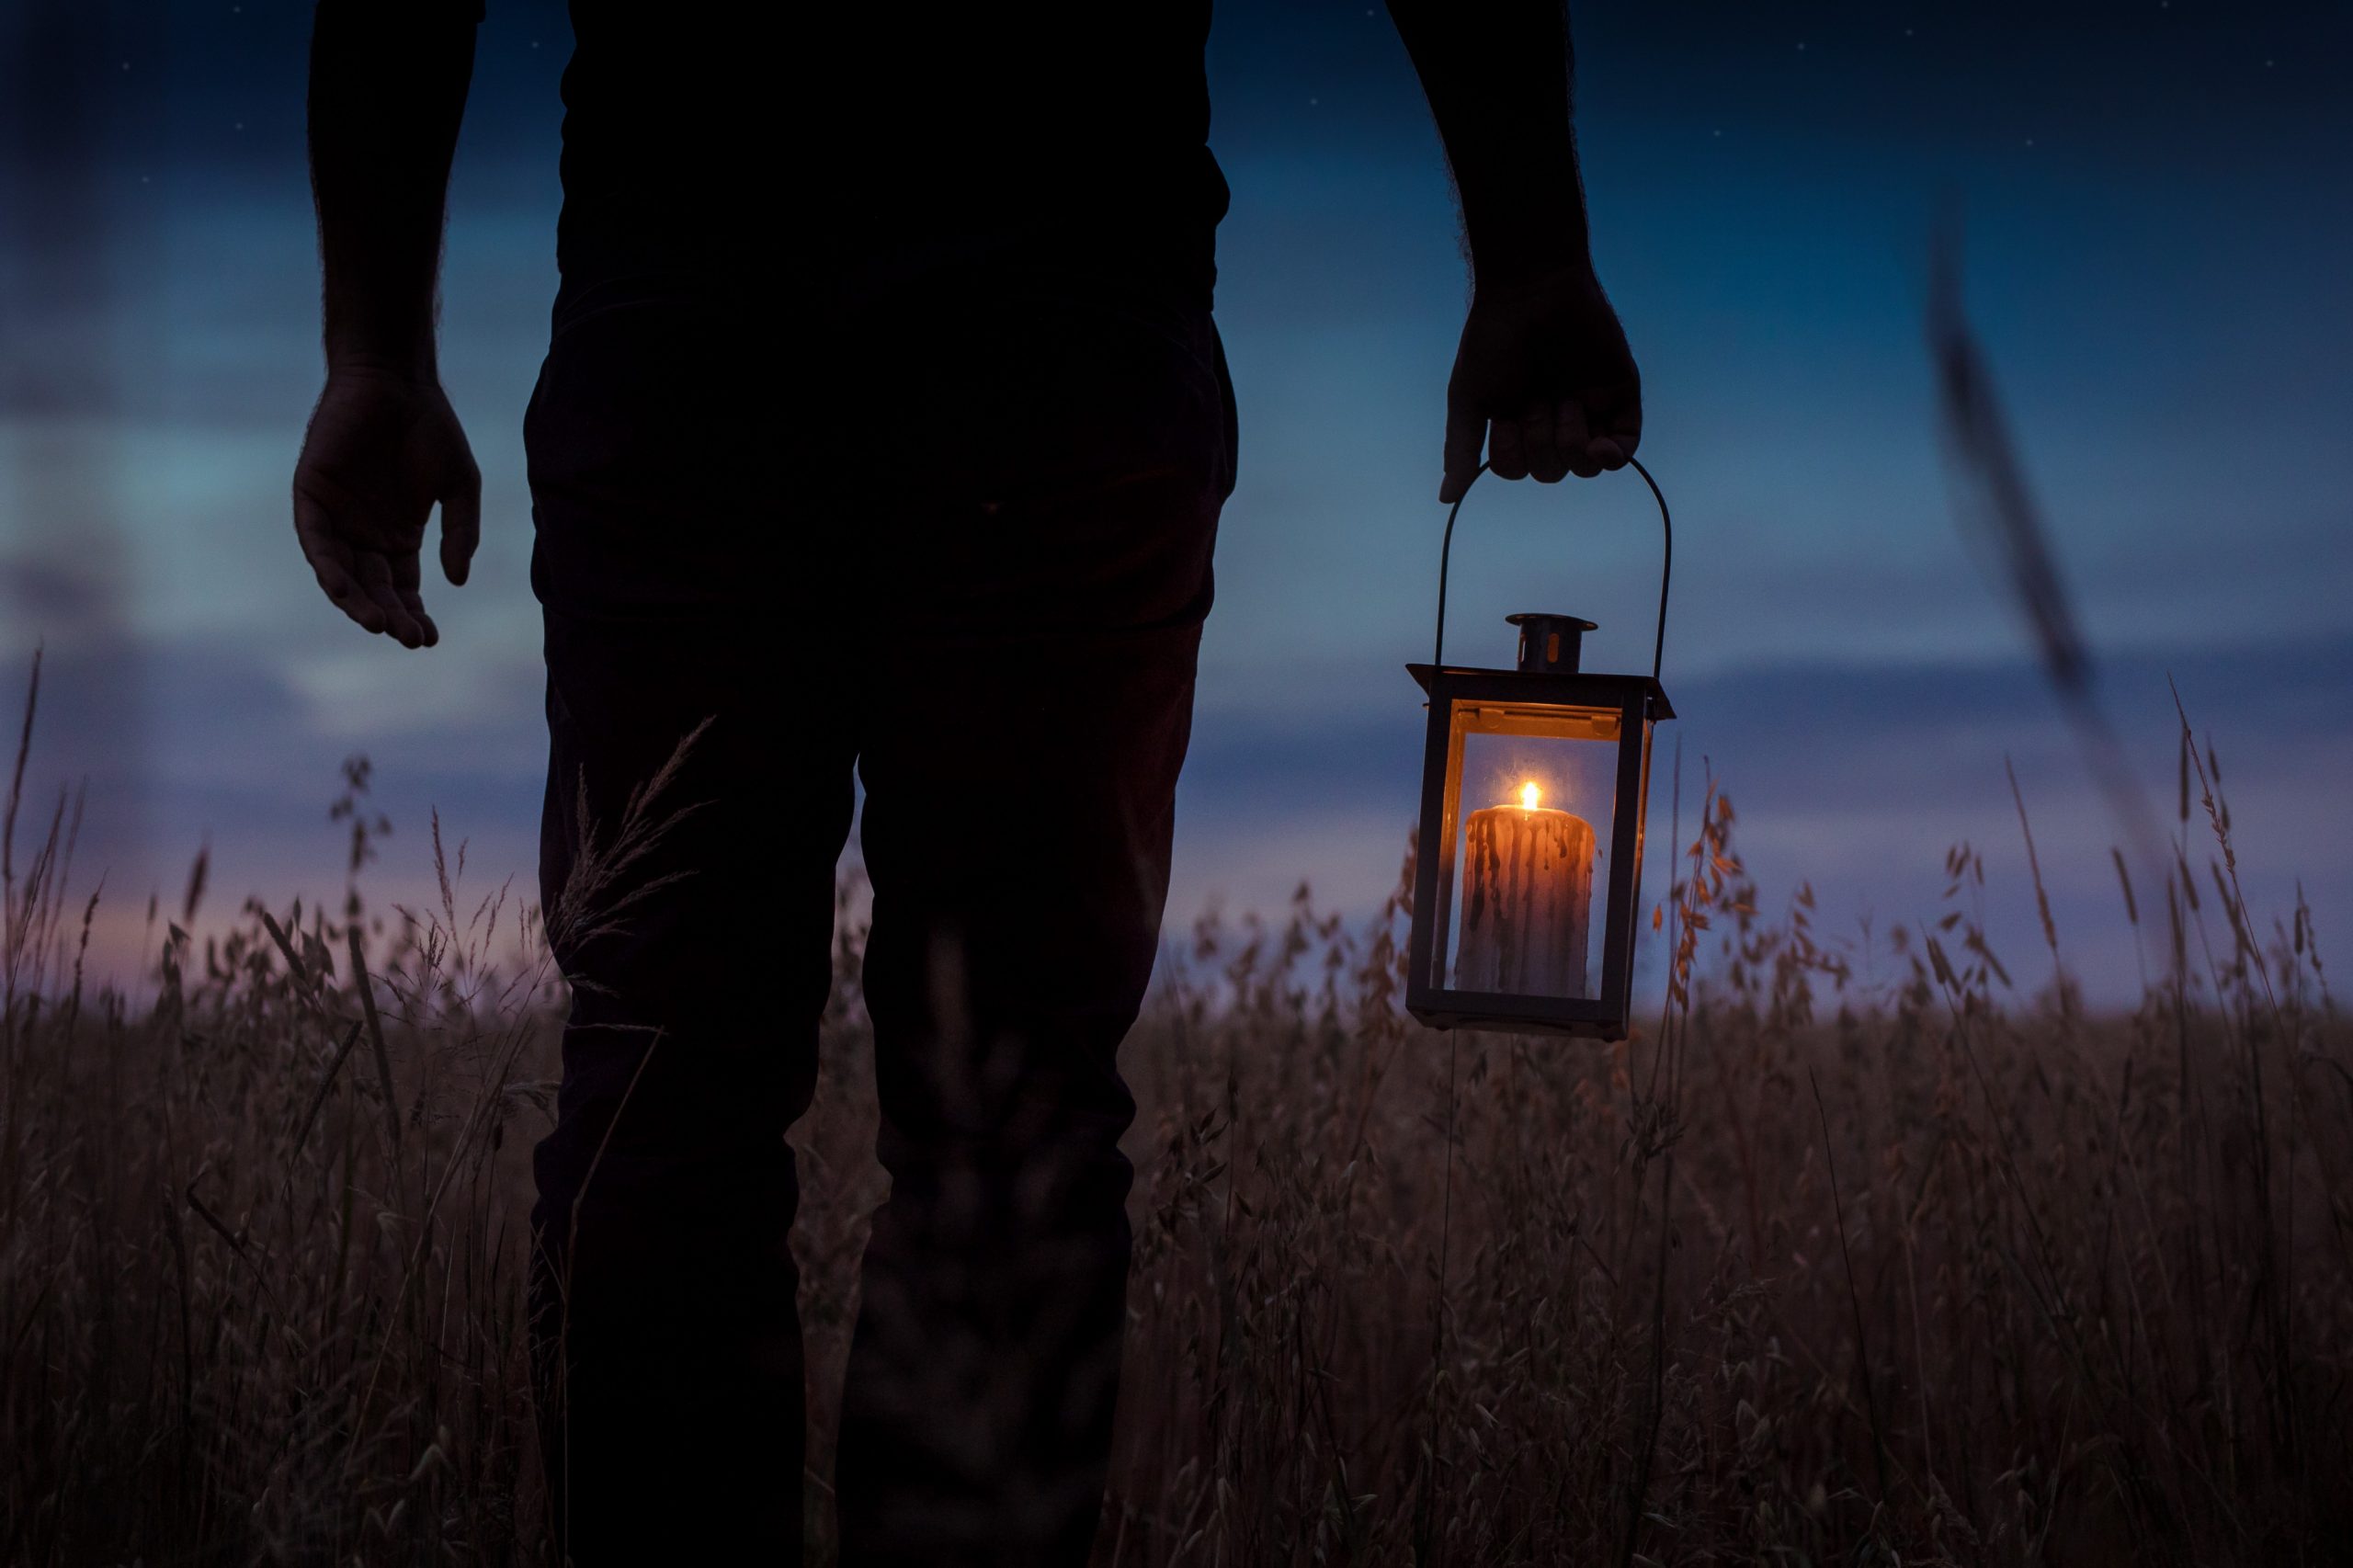 Closeup of man holding lantern, walking in a field at night